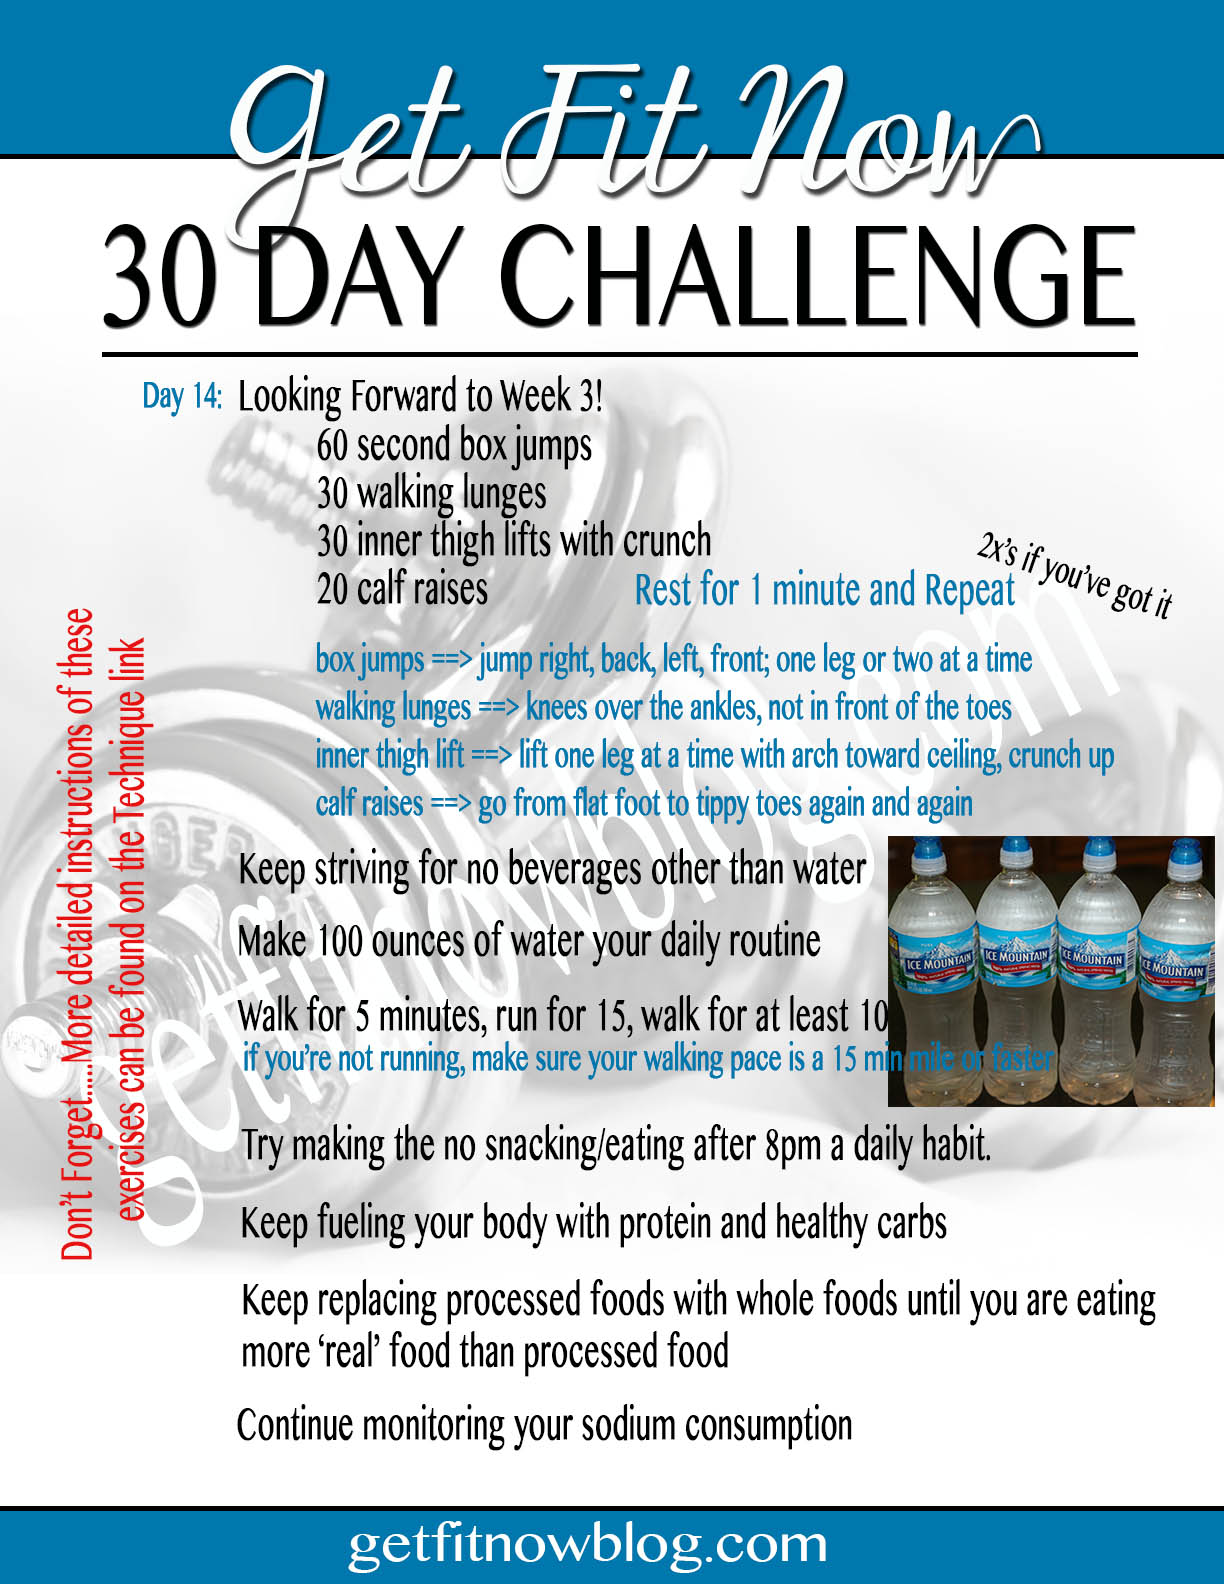 day 14 challenge